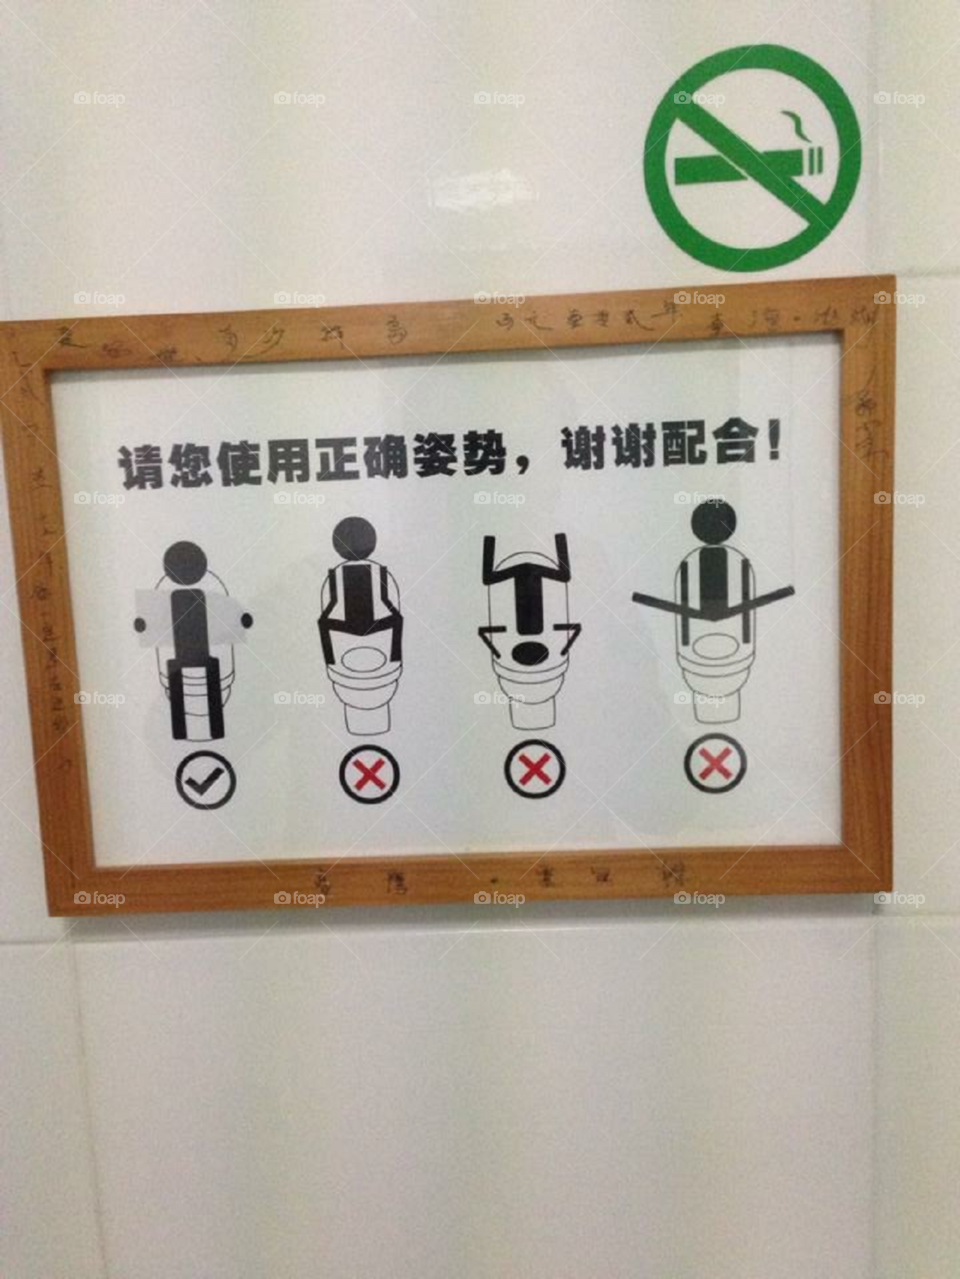 Bathroom instructions in Suzhou